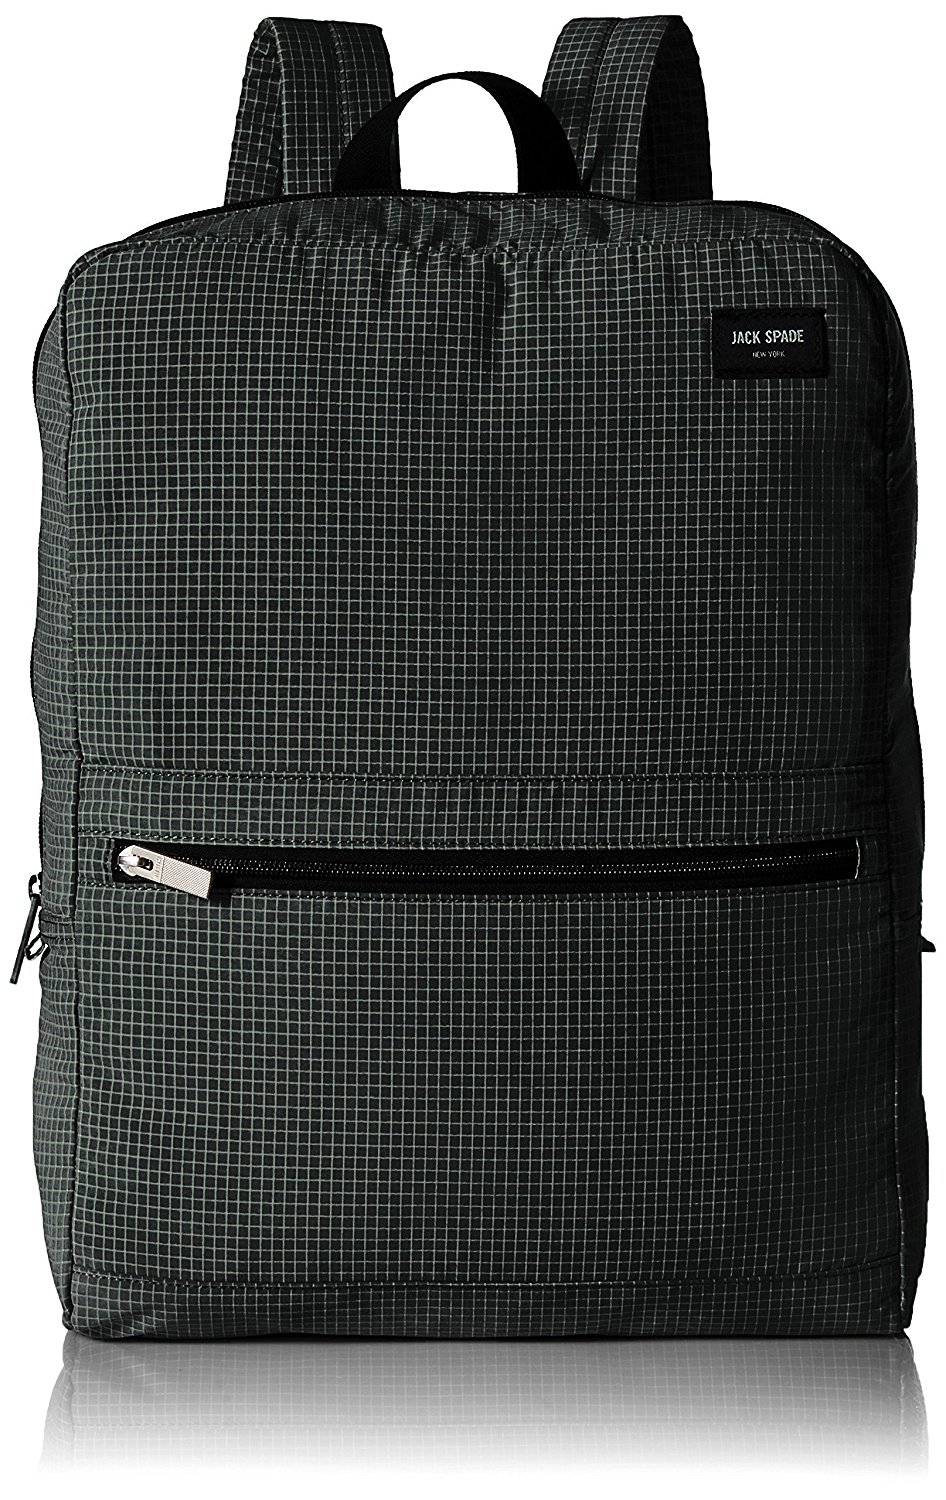 Jack Spade Men's Packable Graph Check Backpack